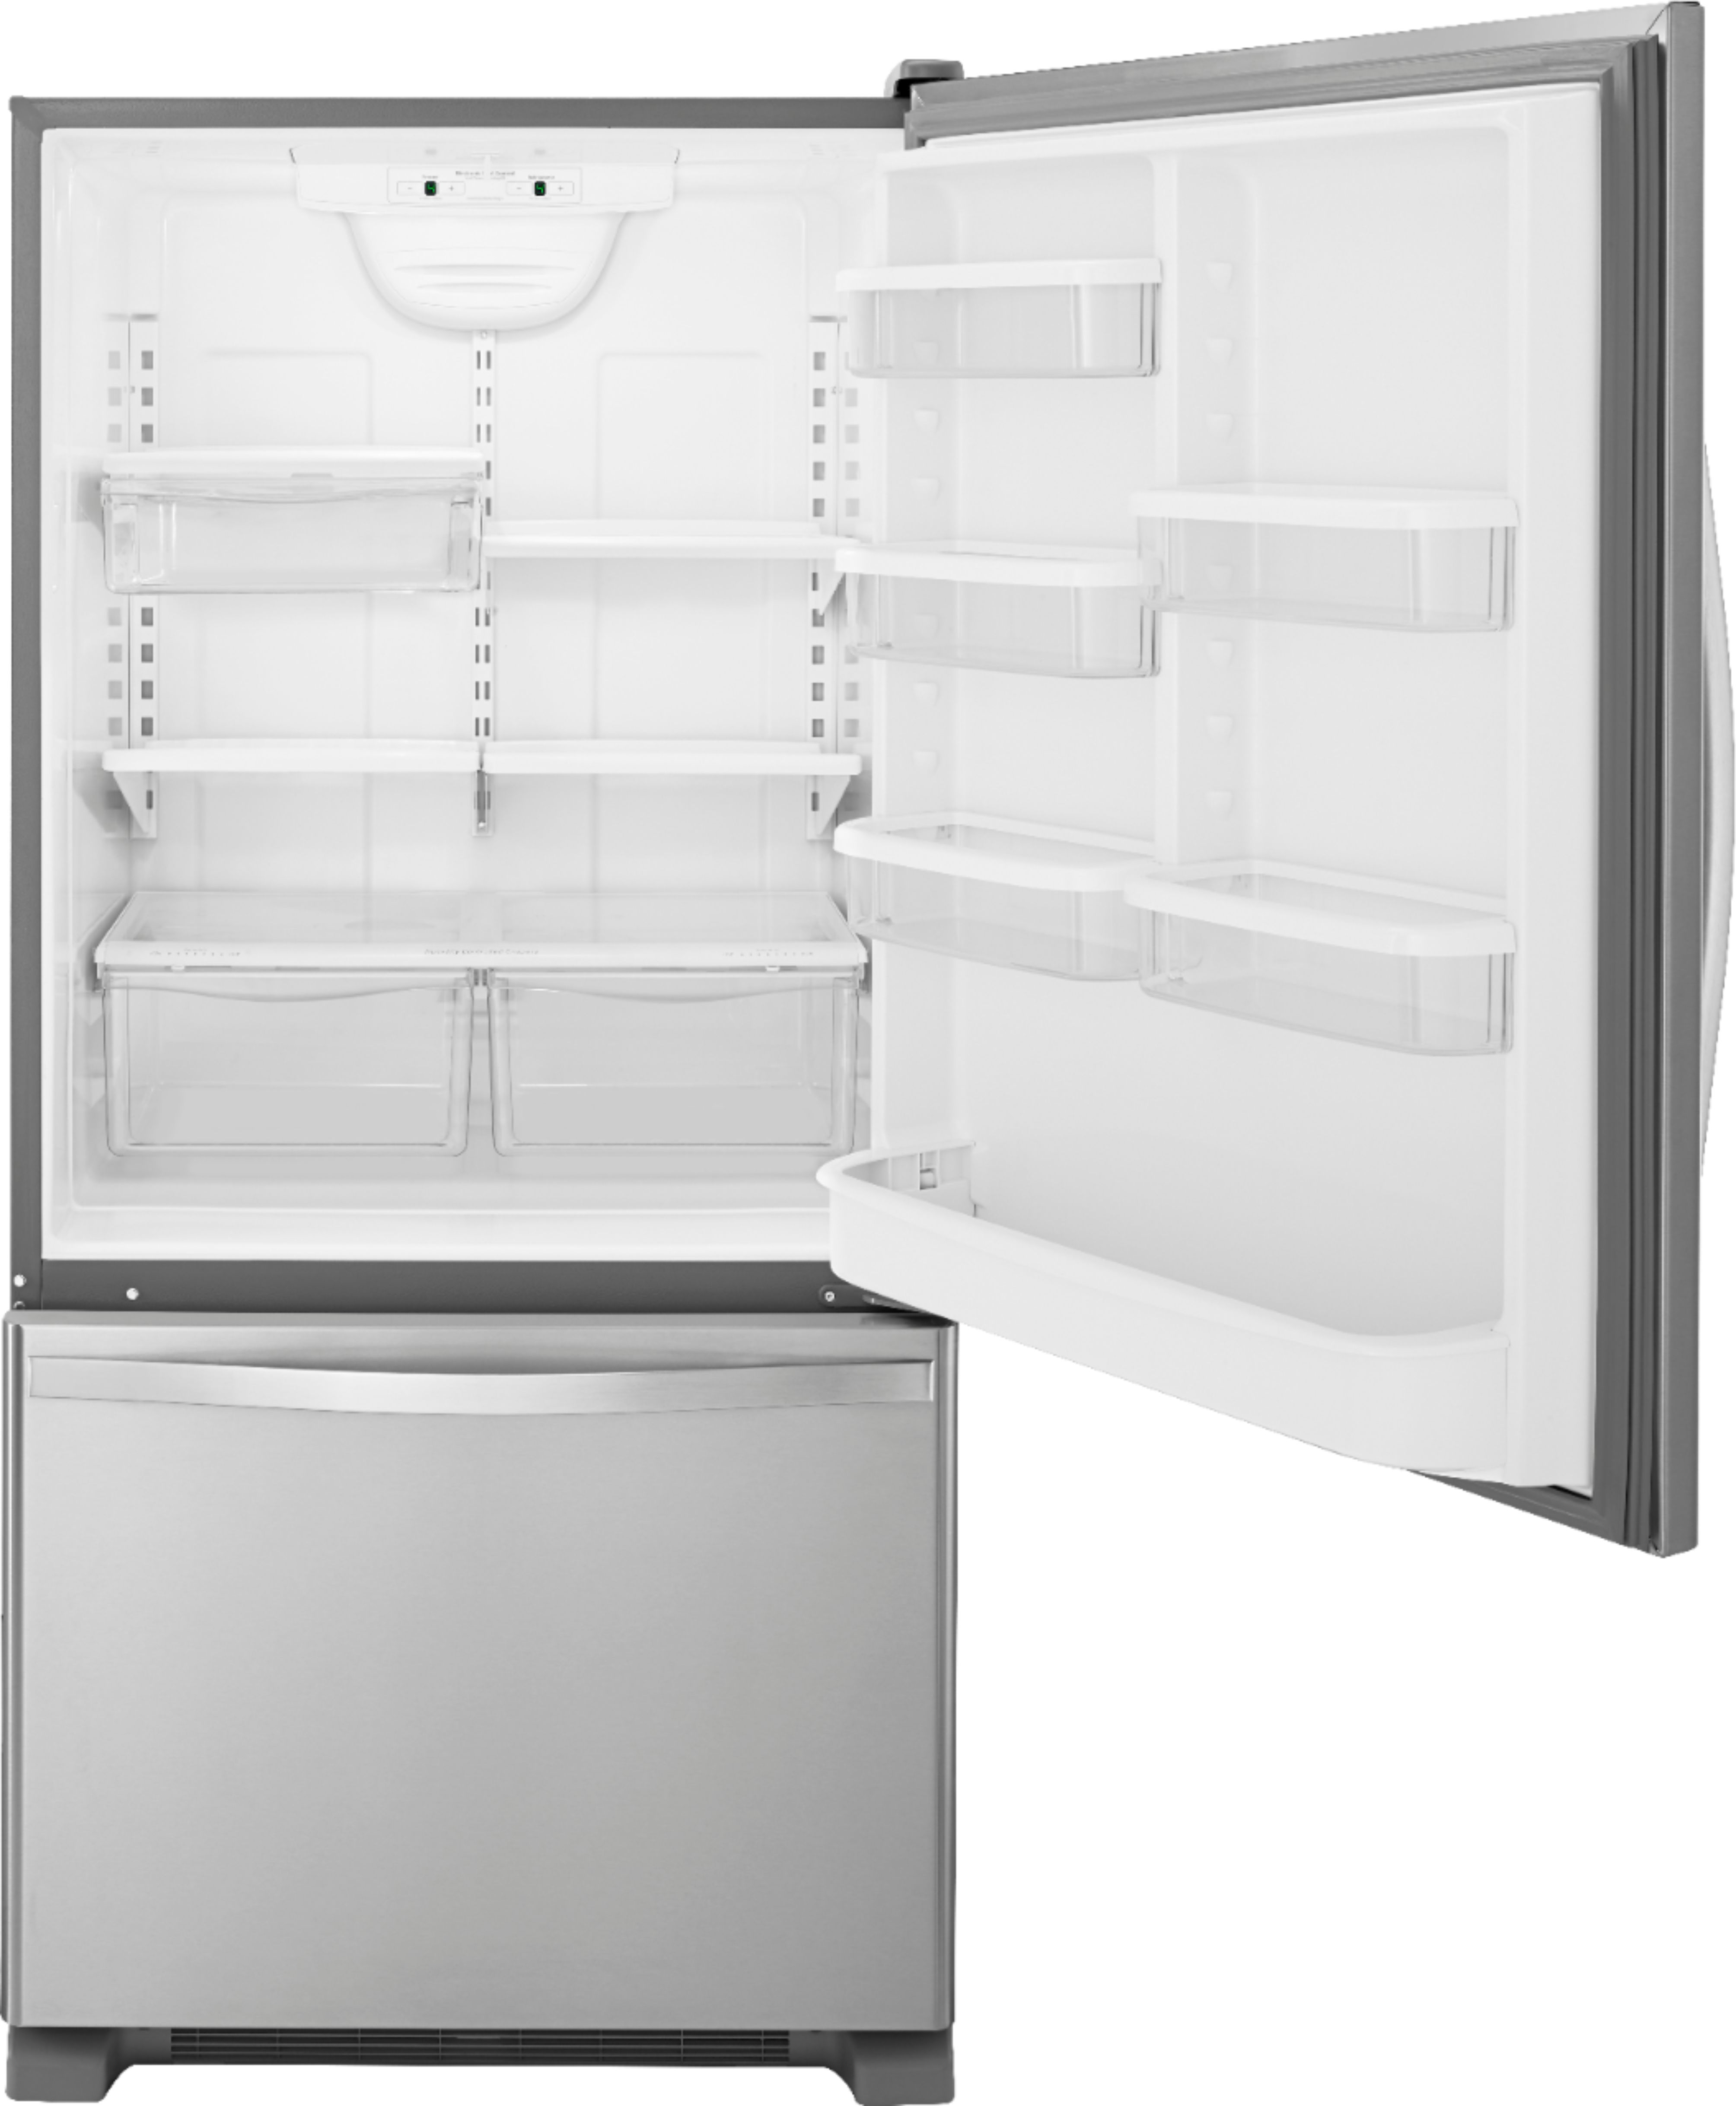 WRB329DMBW Whirlpool 30-inches wide Bottom-Freezer Refrigerator